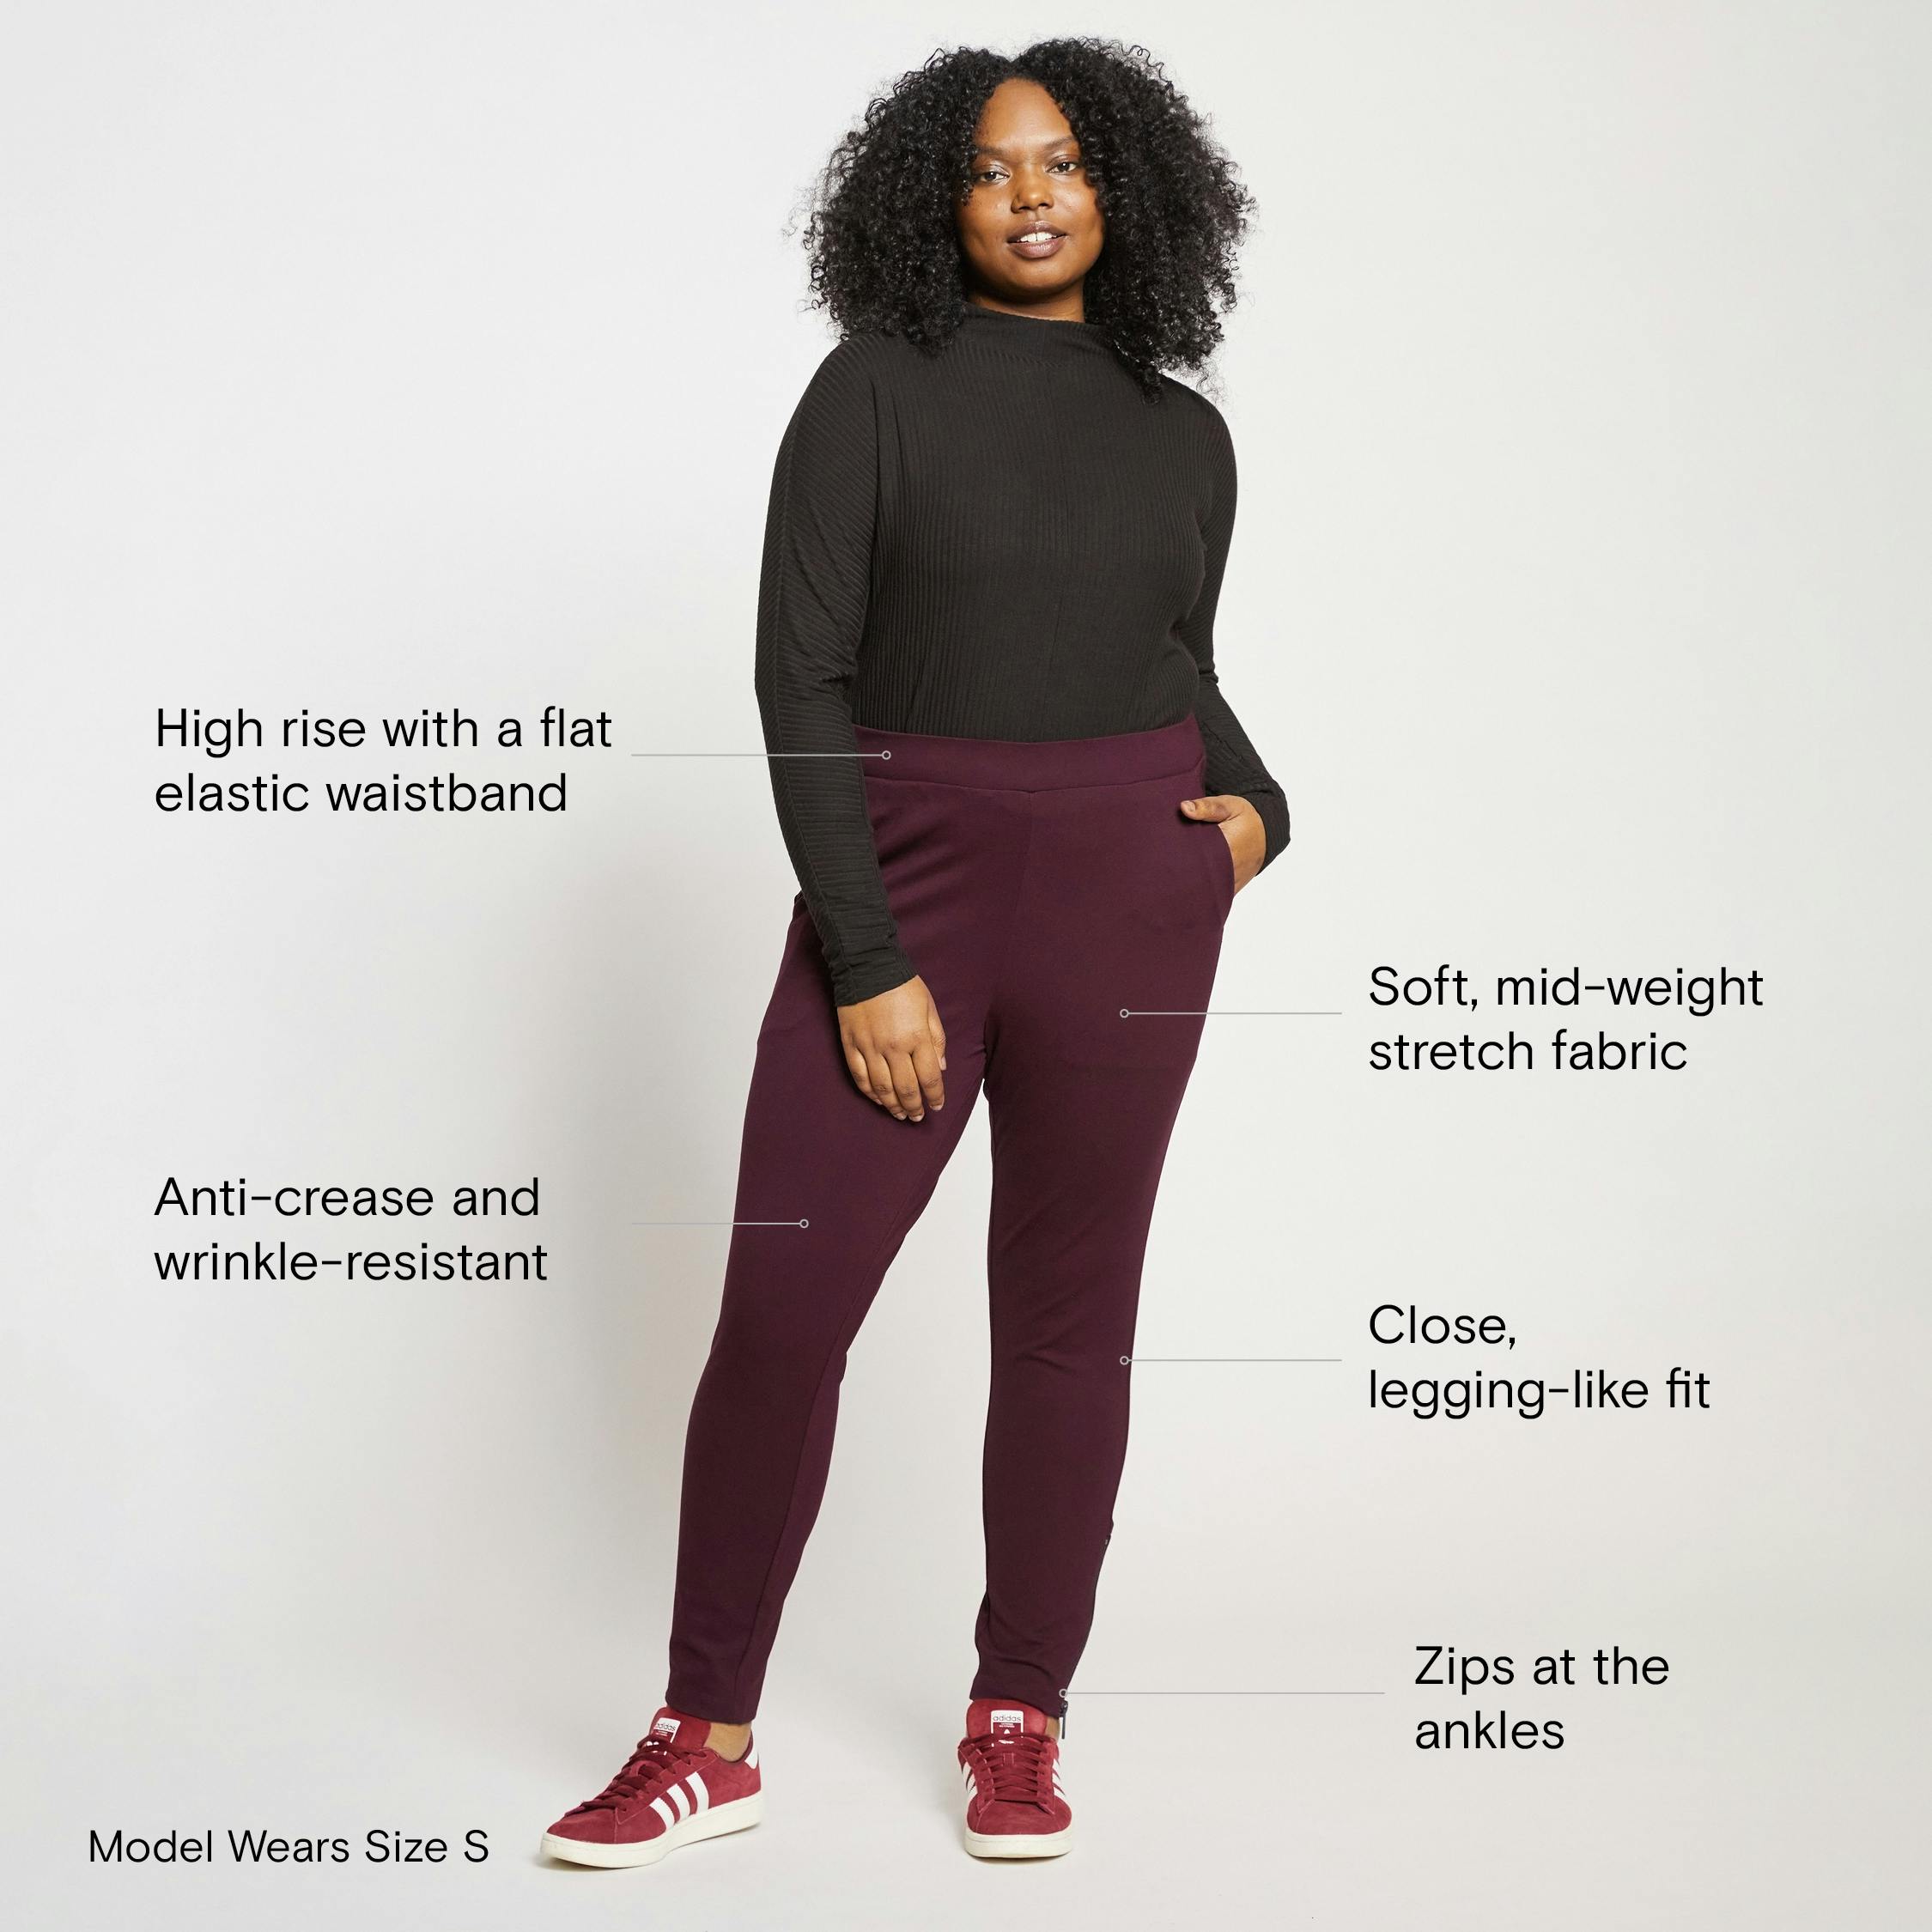 Aritzia flare leggings Black Size XXS - $40 (46% Off Retail) New